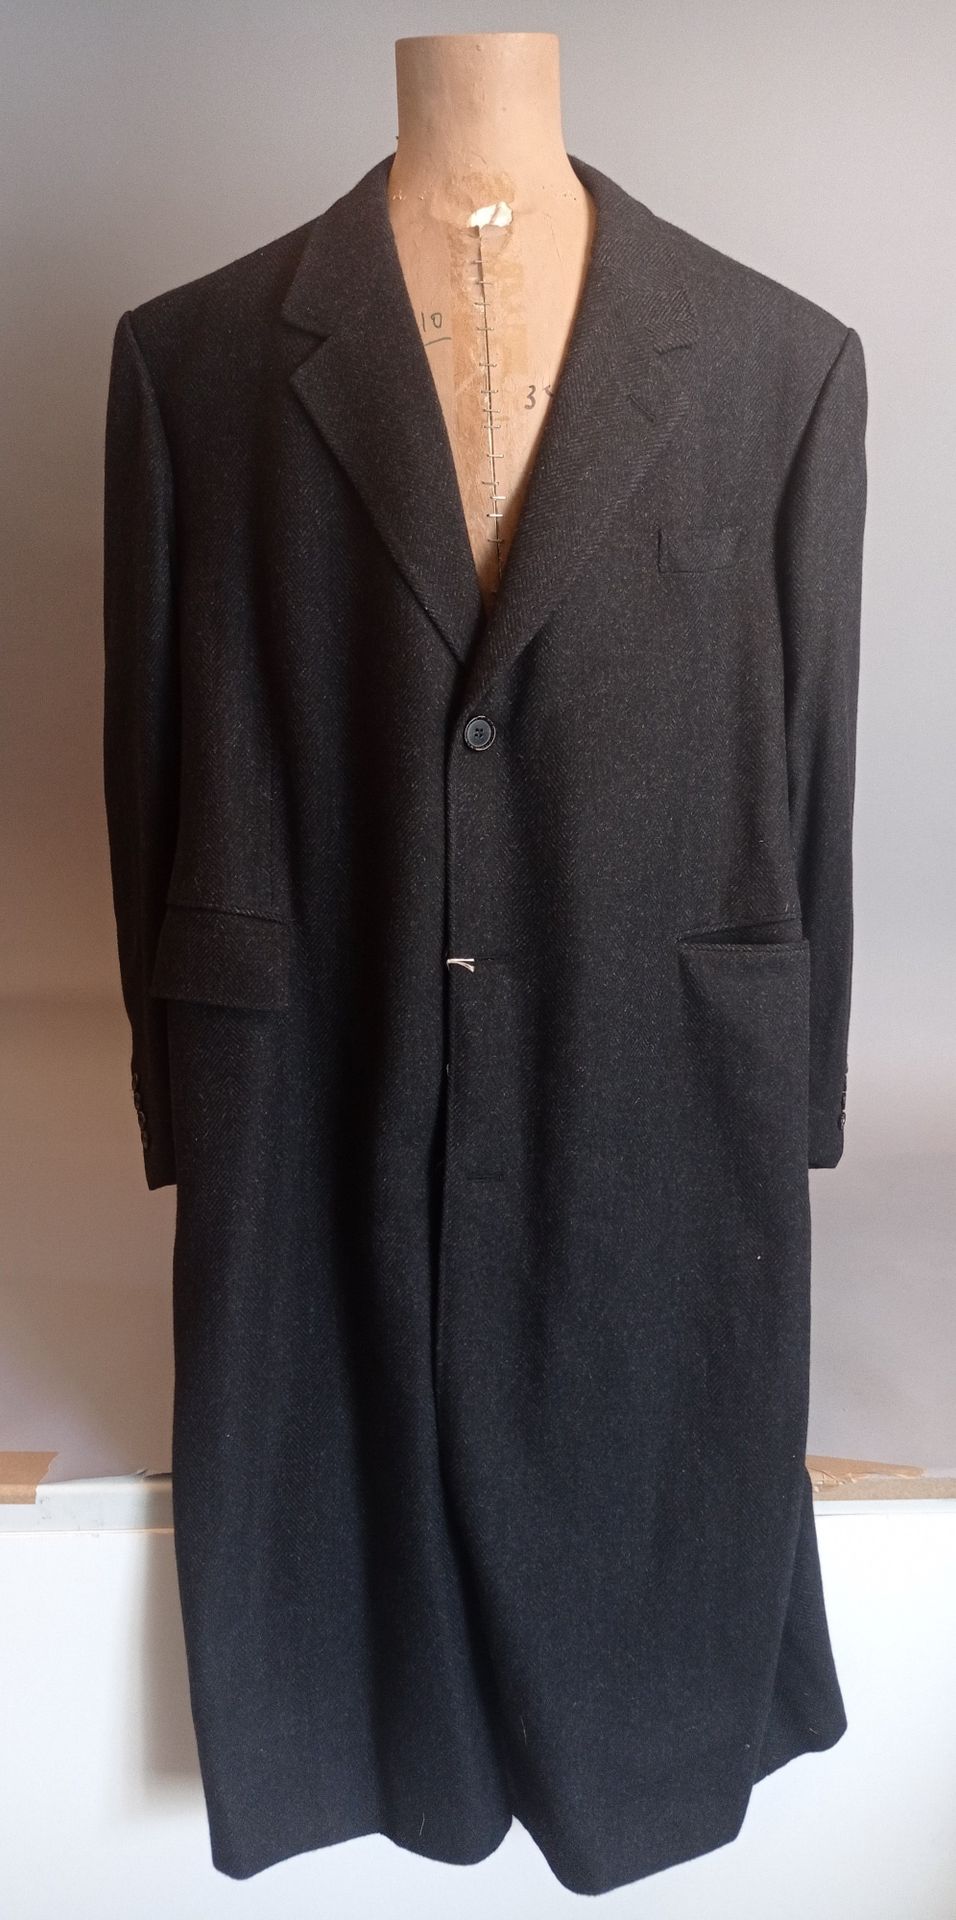 Christian DIOR Boutique Mister
Herringbone wool coat, dark grey